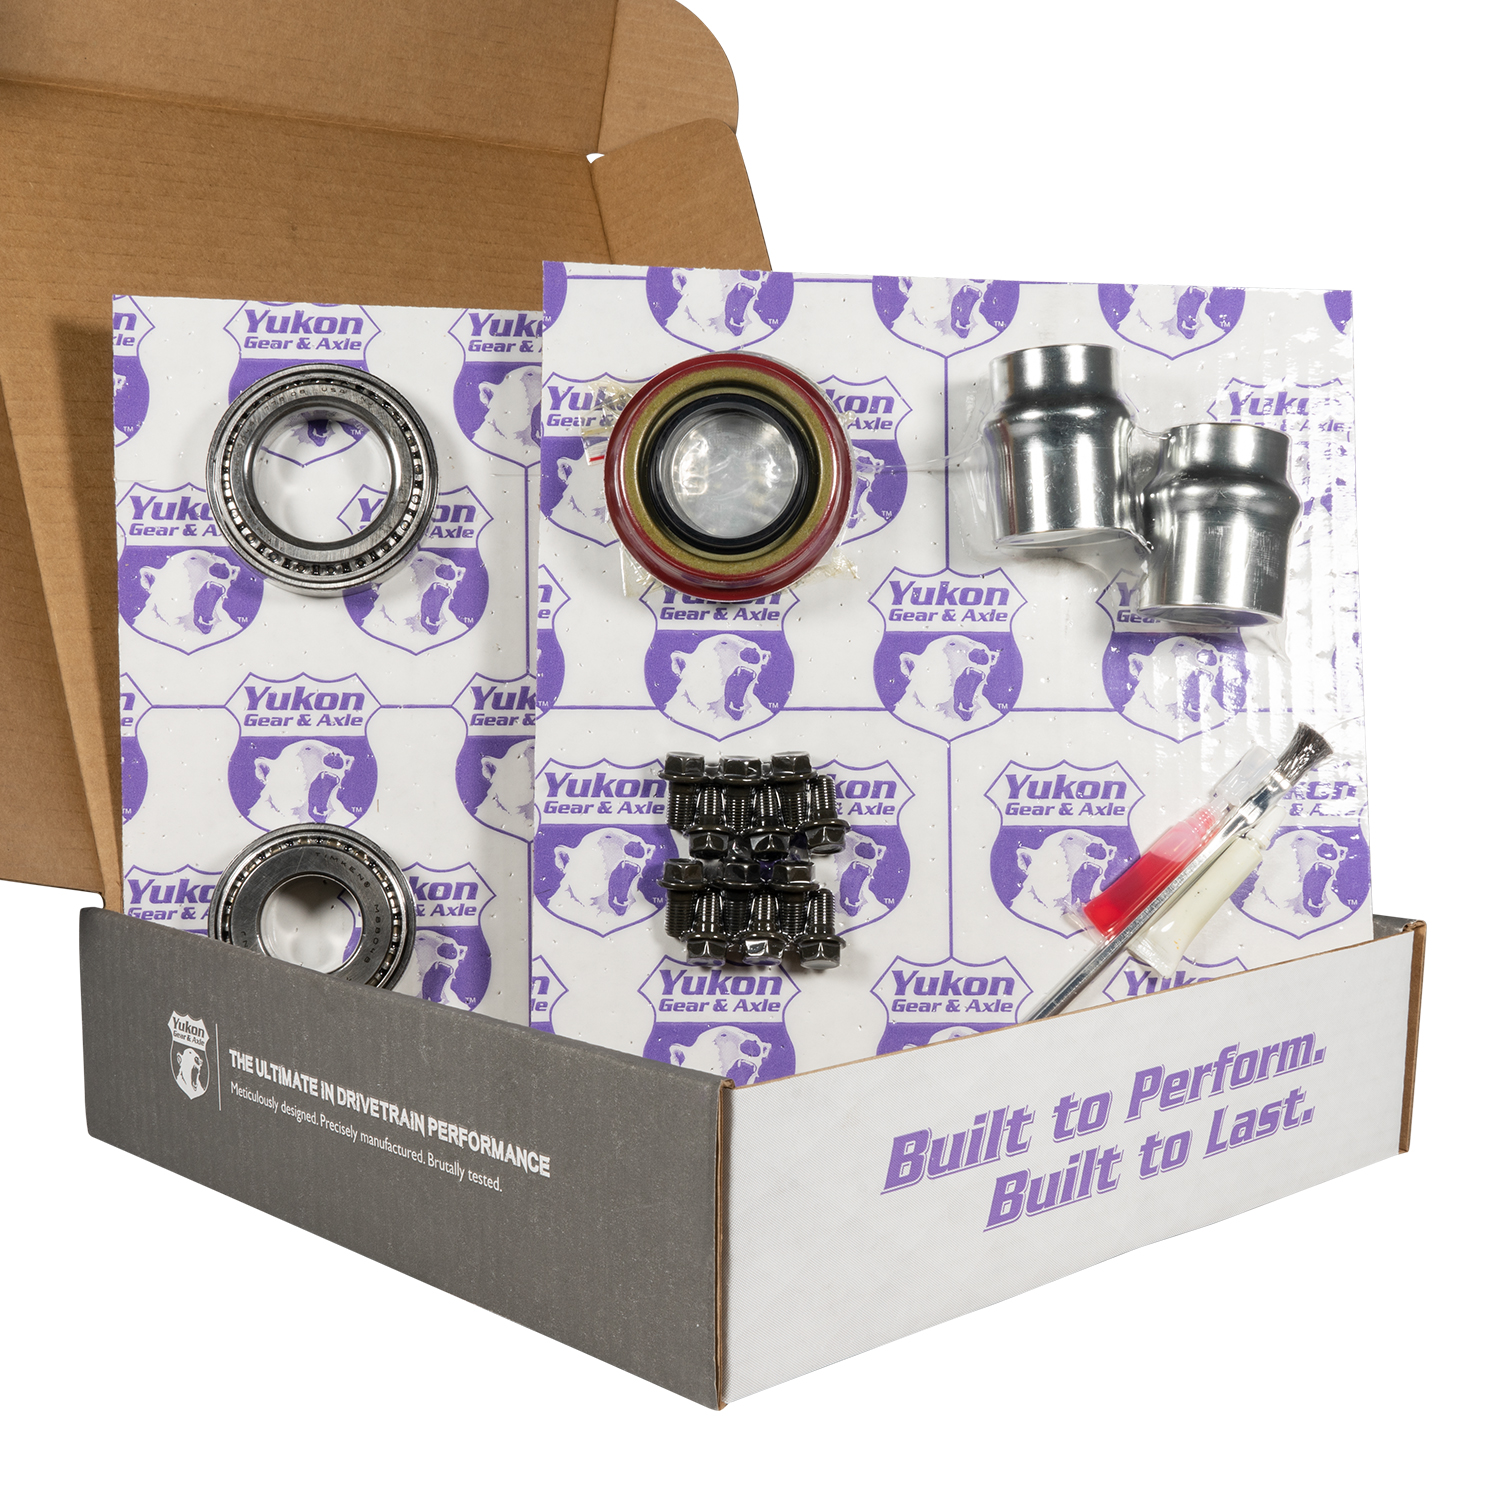 Yukon Muscle Car Limited Slip & Re-Gear Kit for GM 12P, 30 spline, 4.11 ratio